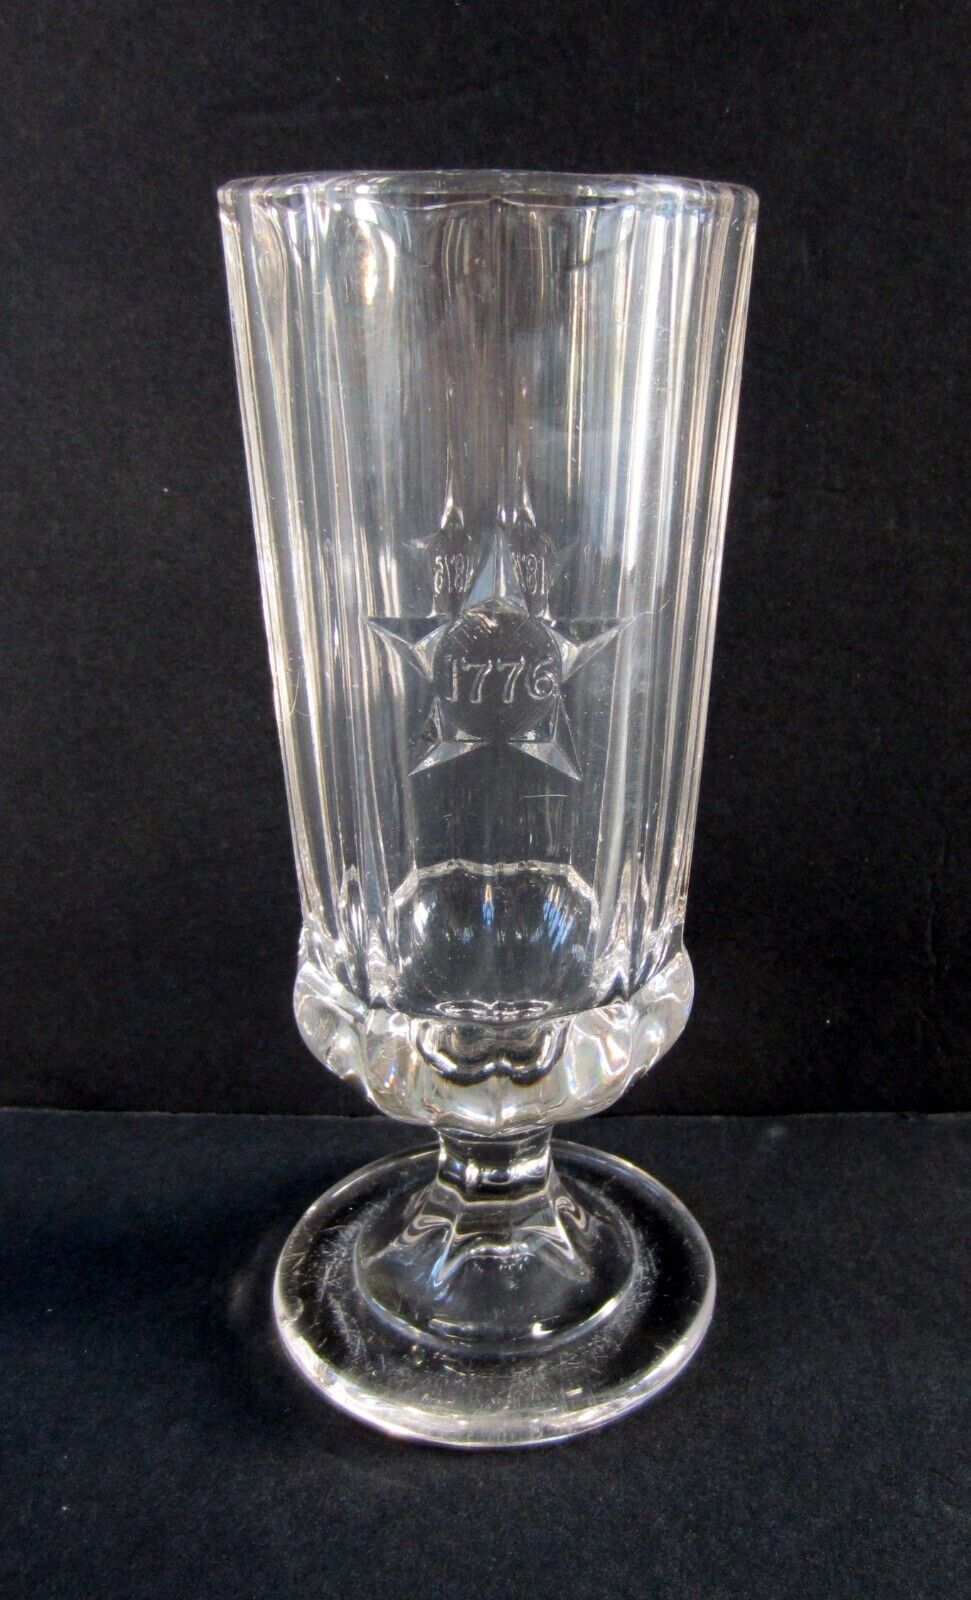 Antique EAPG 1776-1876 Centennial Commemorative Pilsner Beer Glass